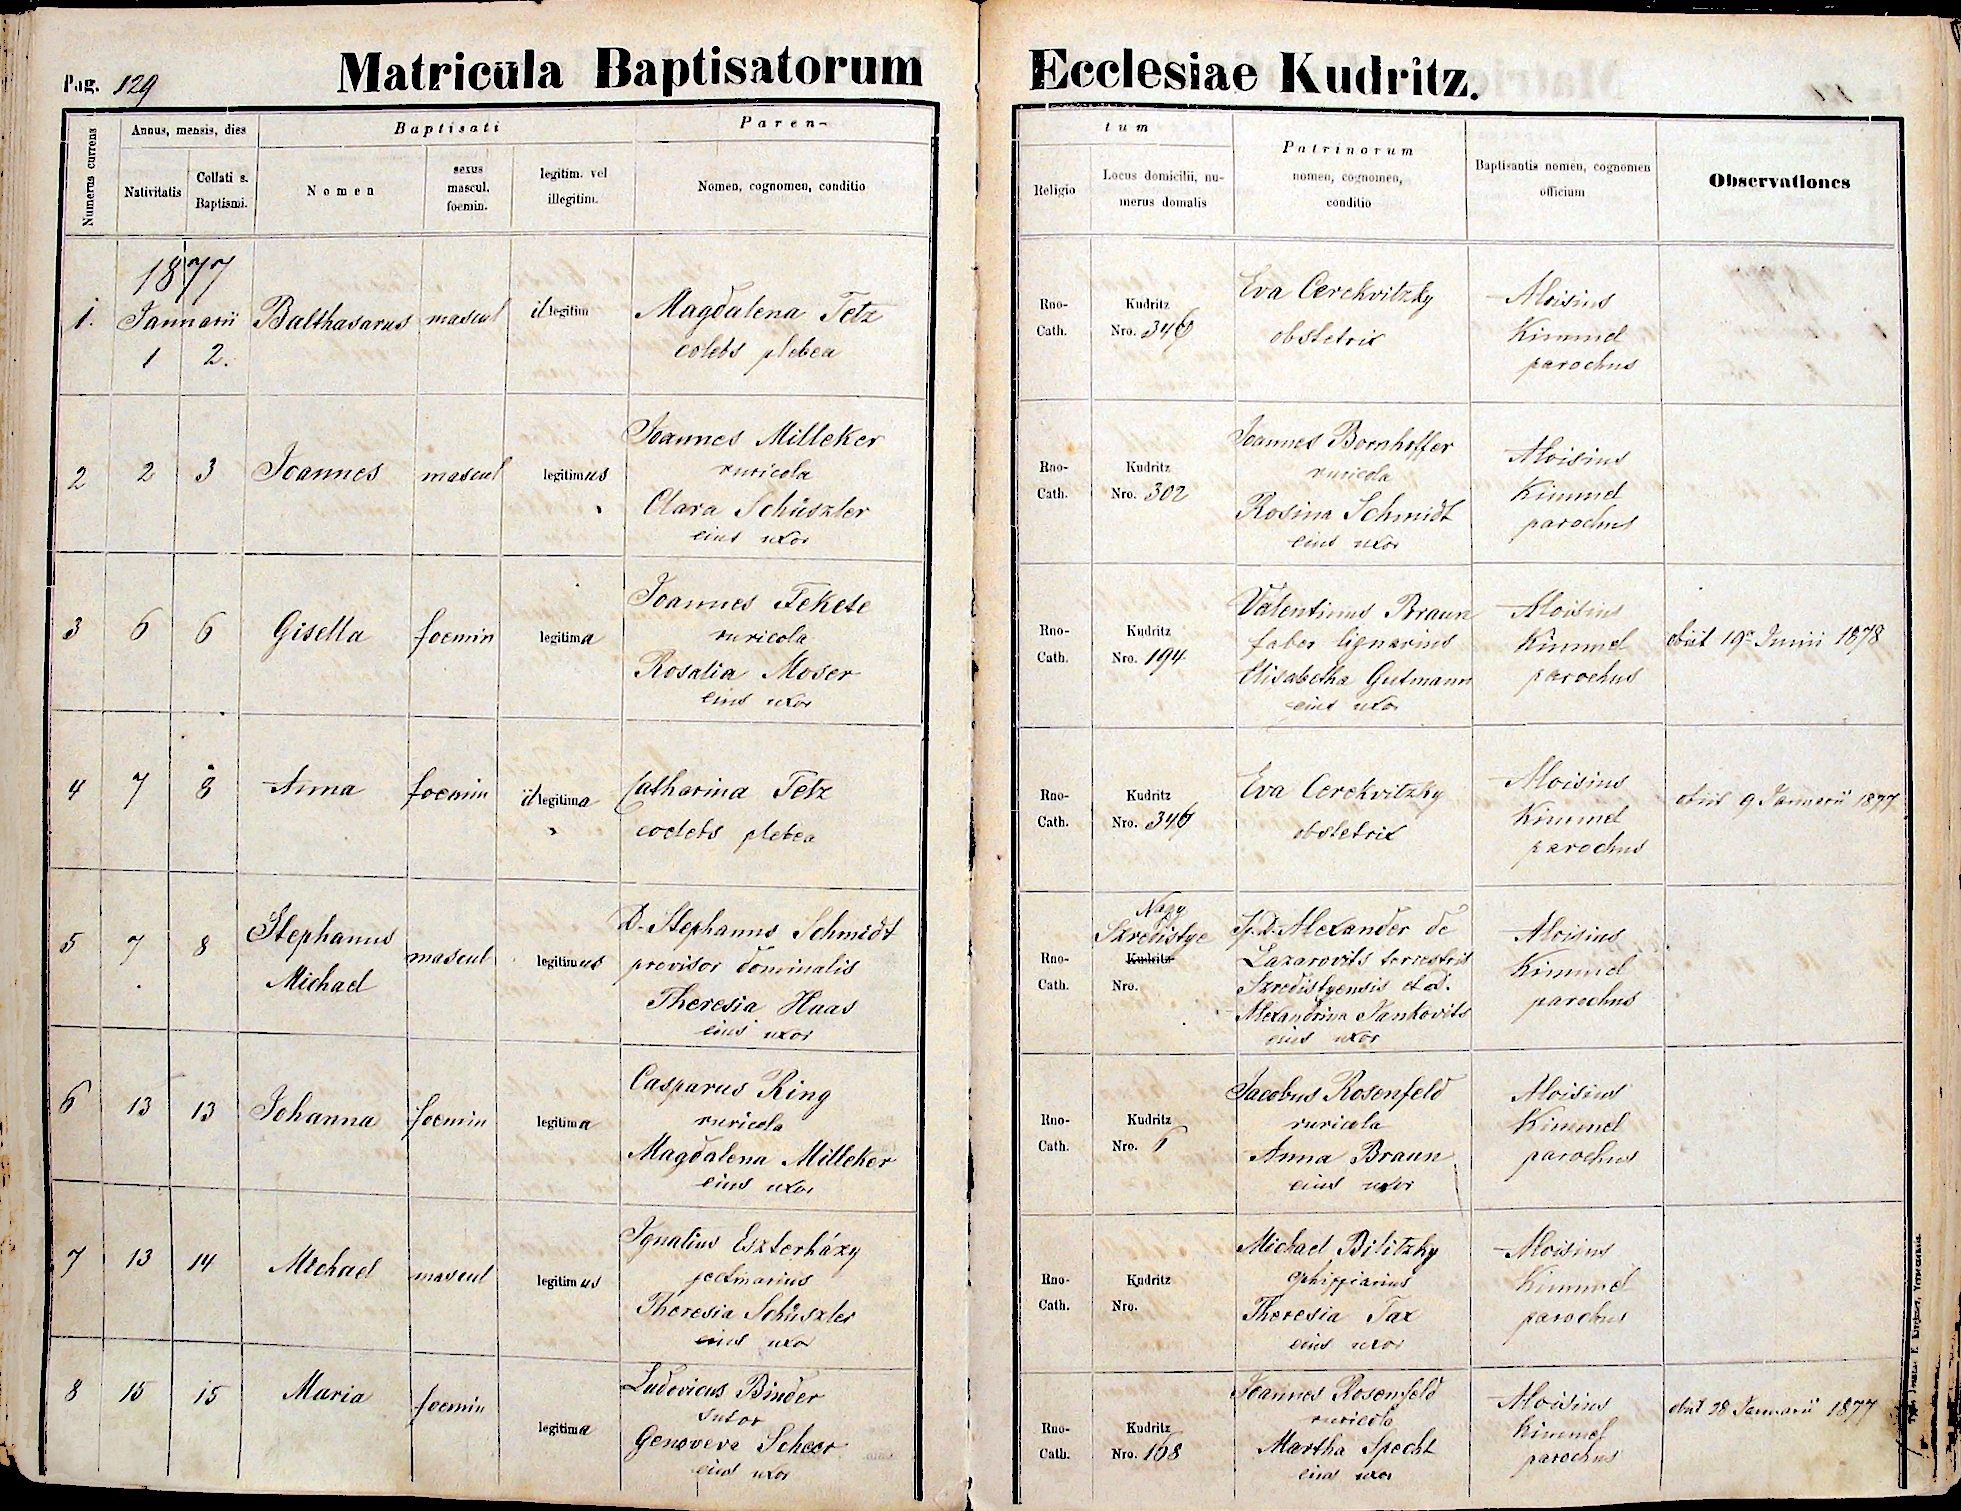 images/church_records/BIRTHS/1870-1879B/1876/129